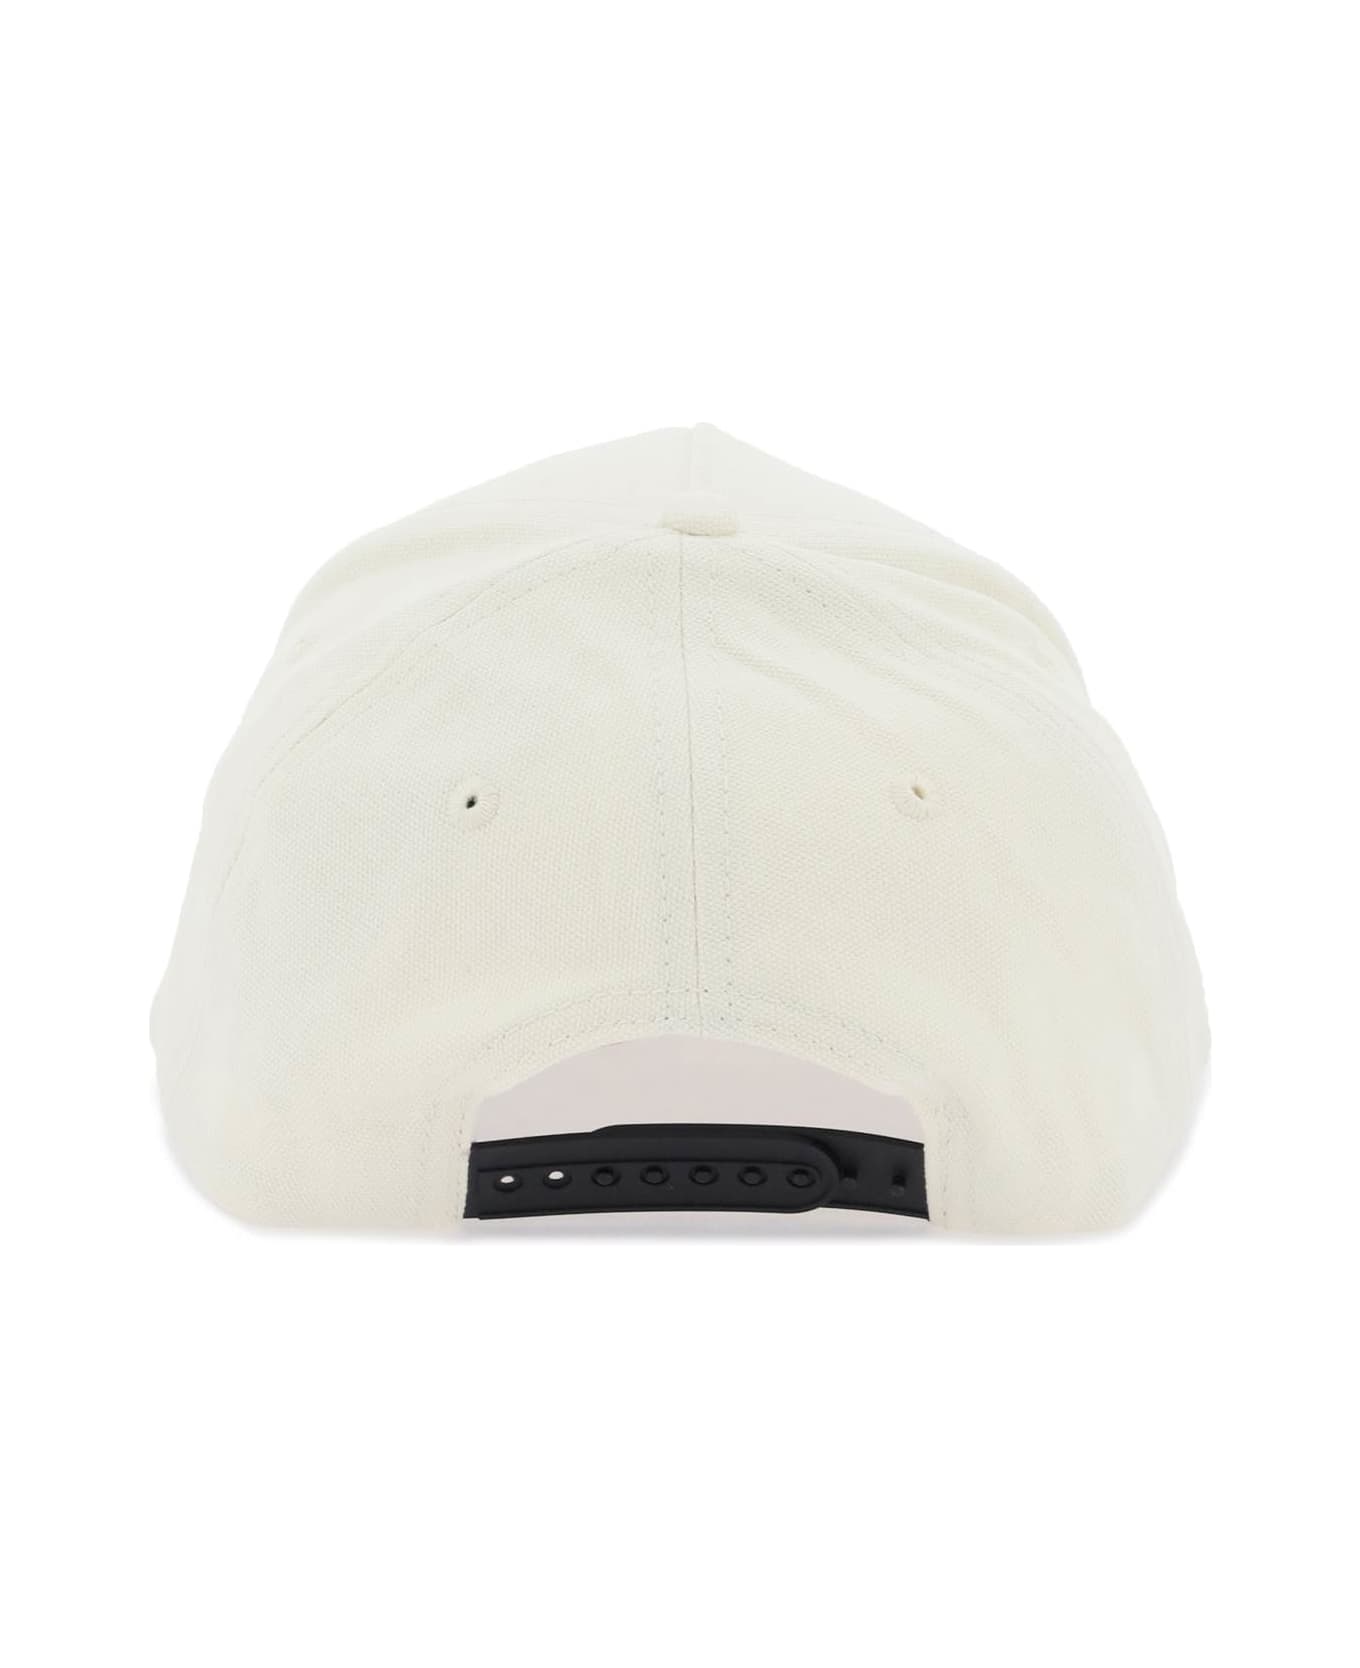 Palm Angels Classic Logo Baseball Cap - OFF WHITE BLACK (White) 帽子